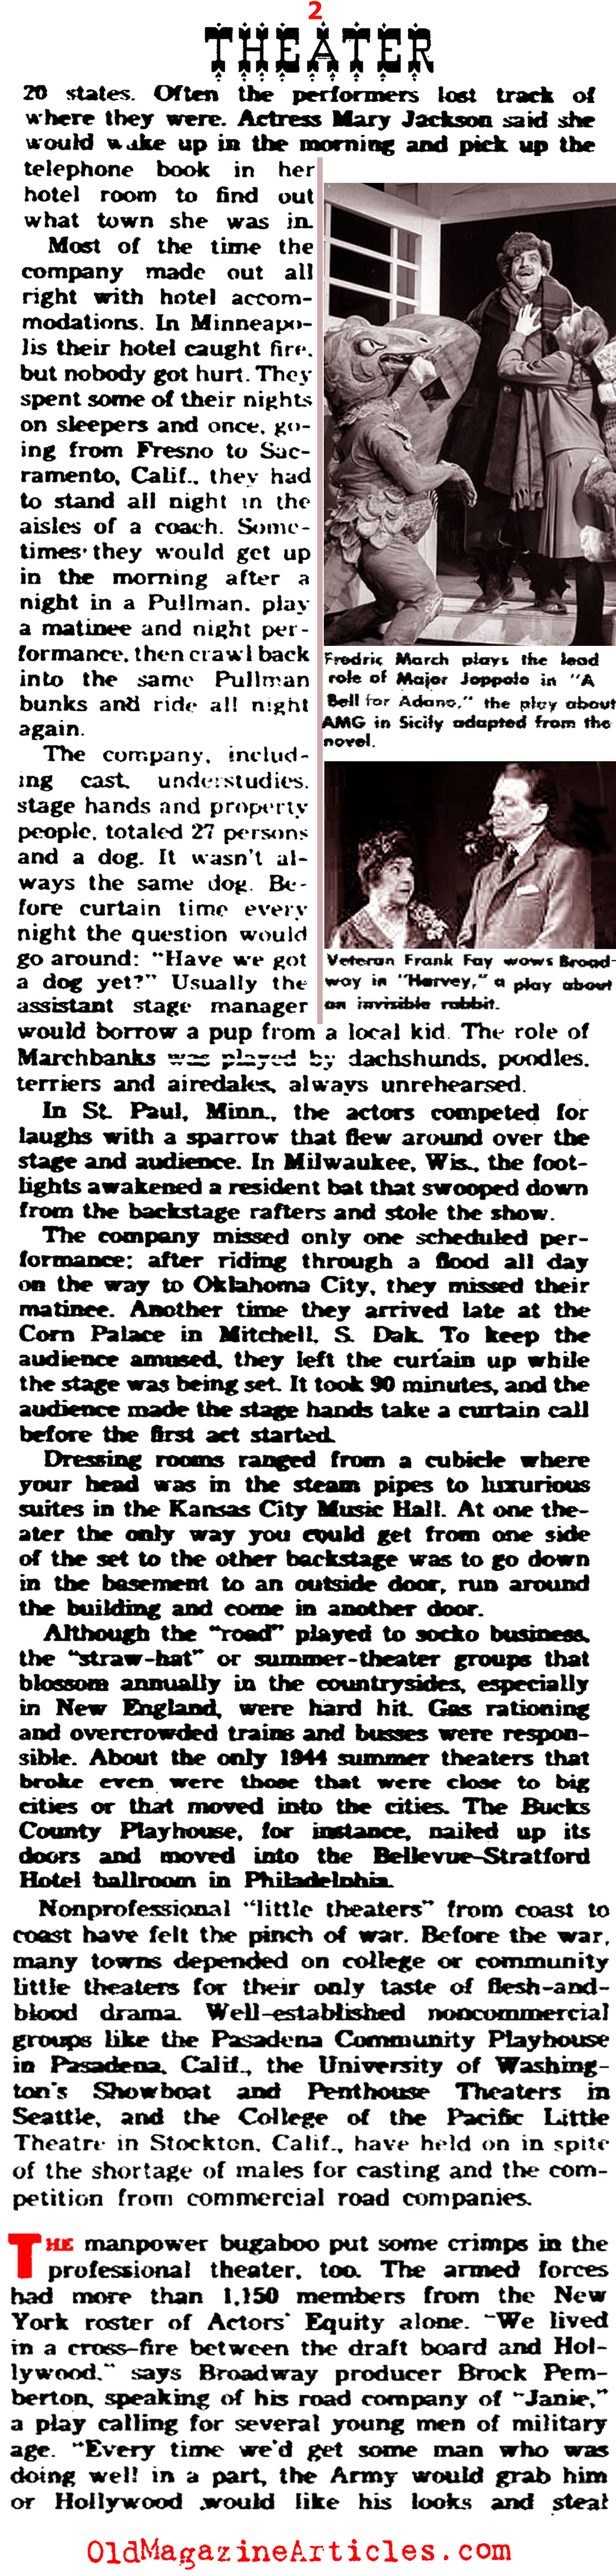 Broadway Theater in Wartime (Yank Magazine, 1945)